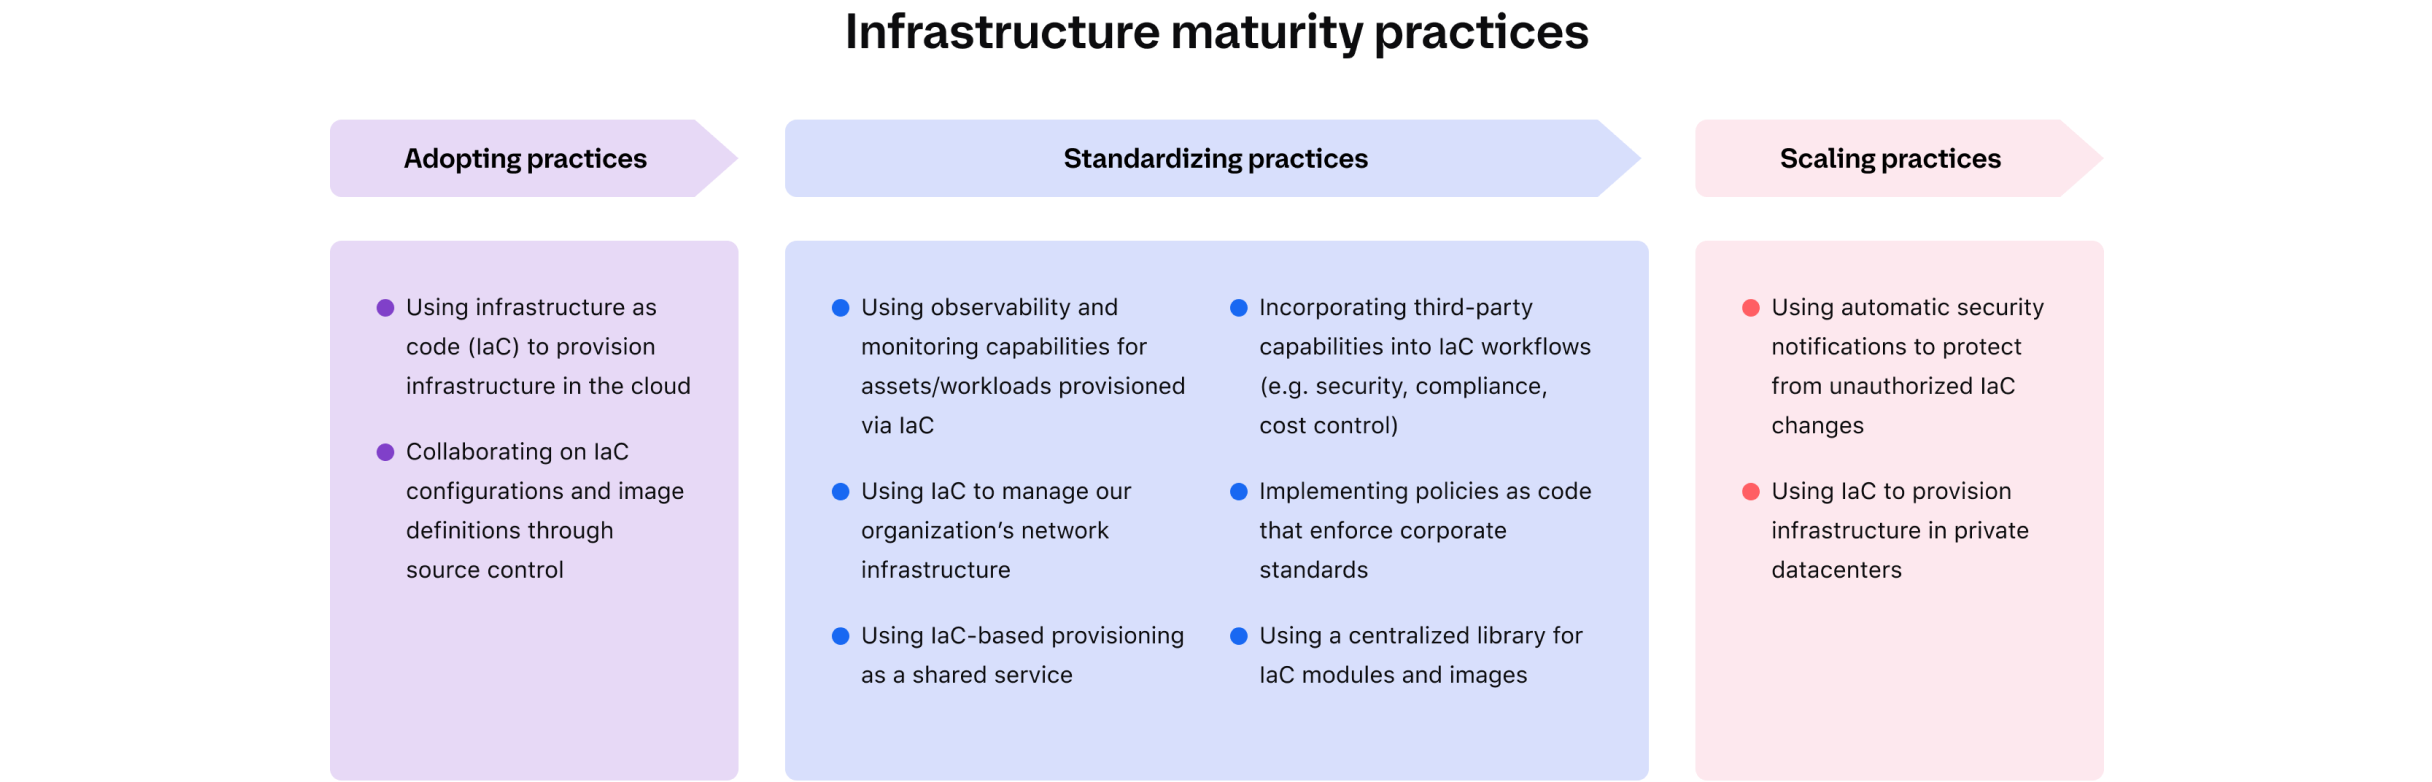 Infrastructure maturity practices